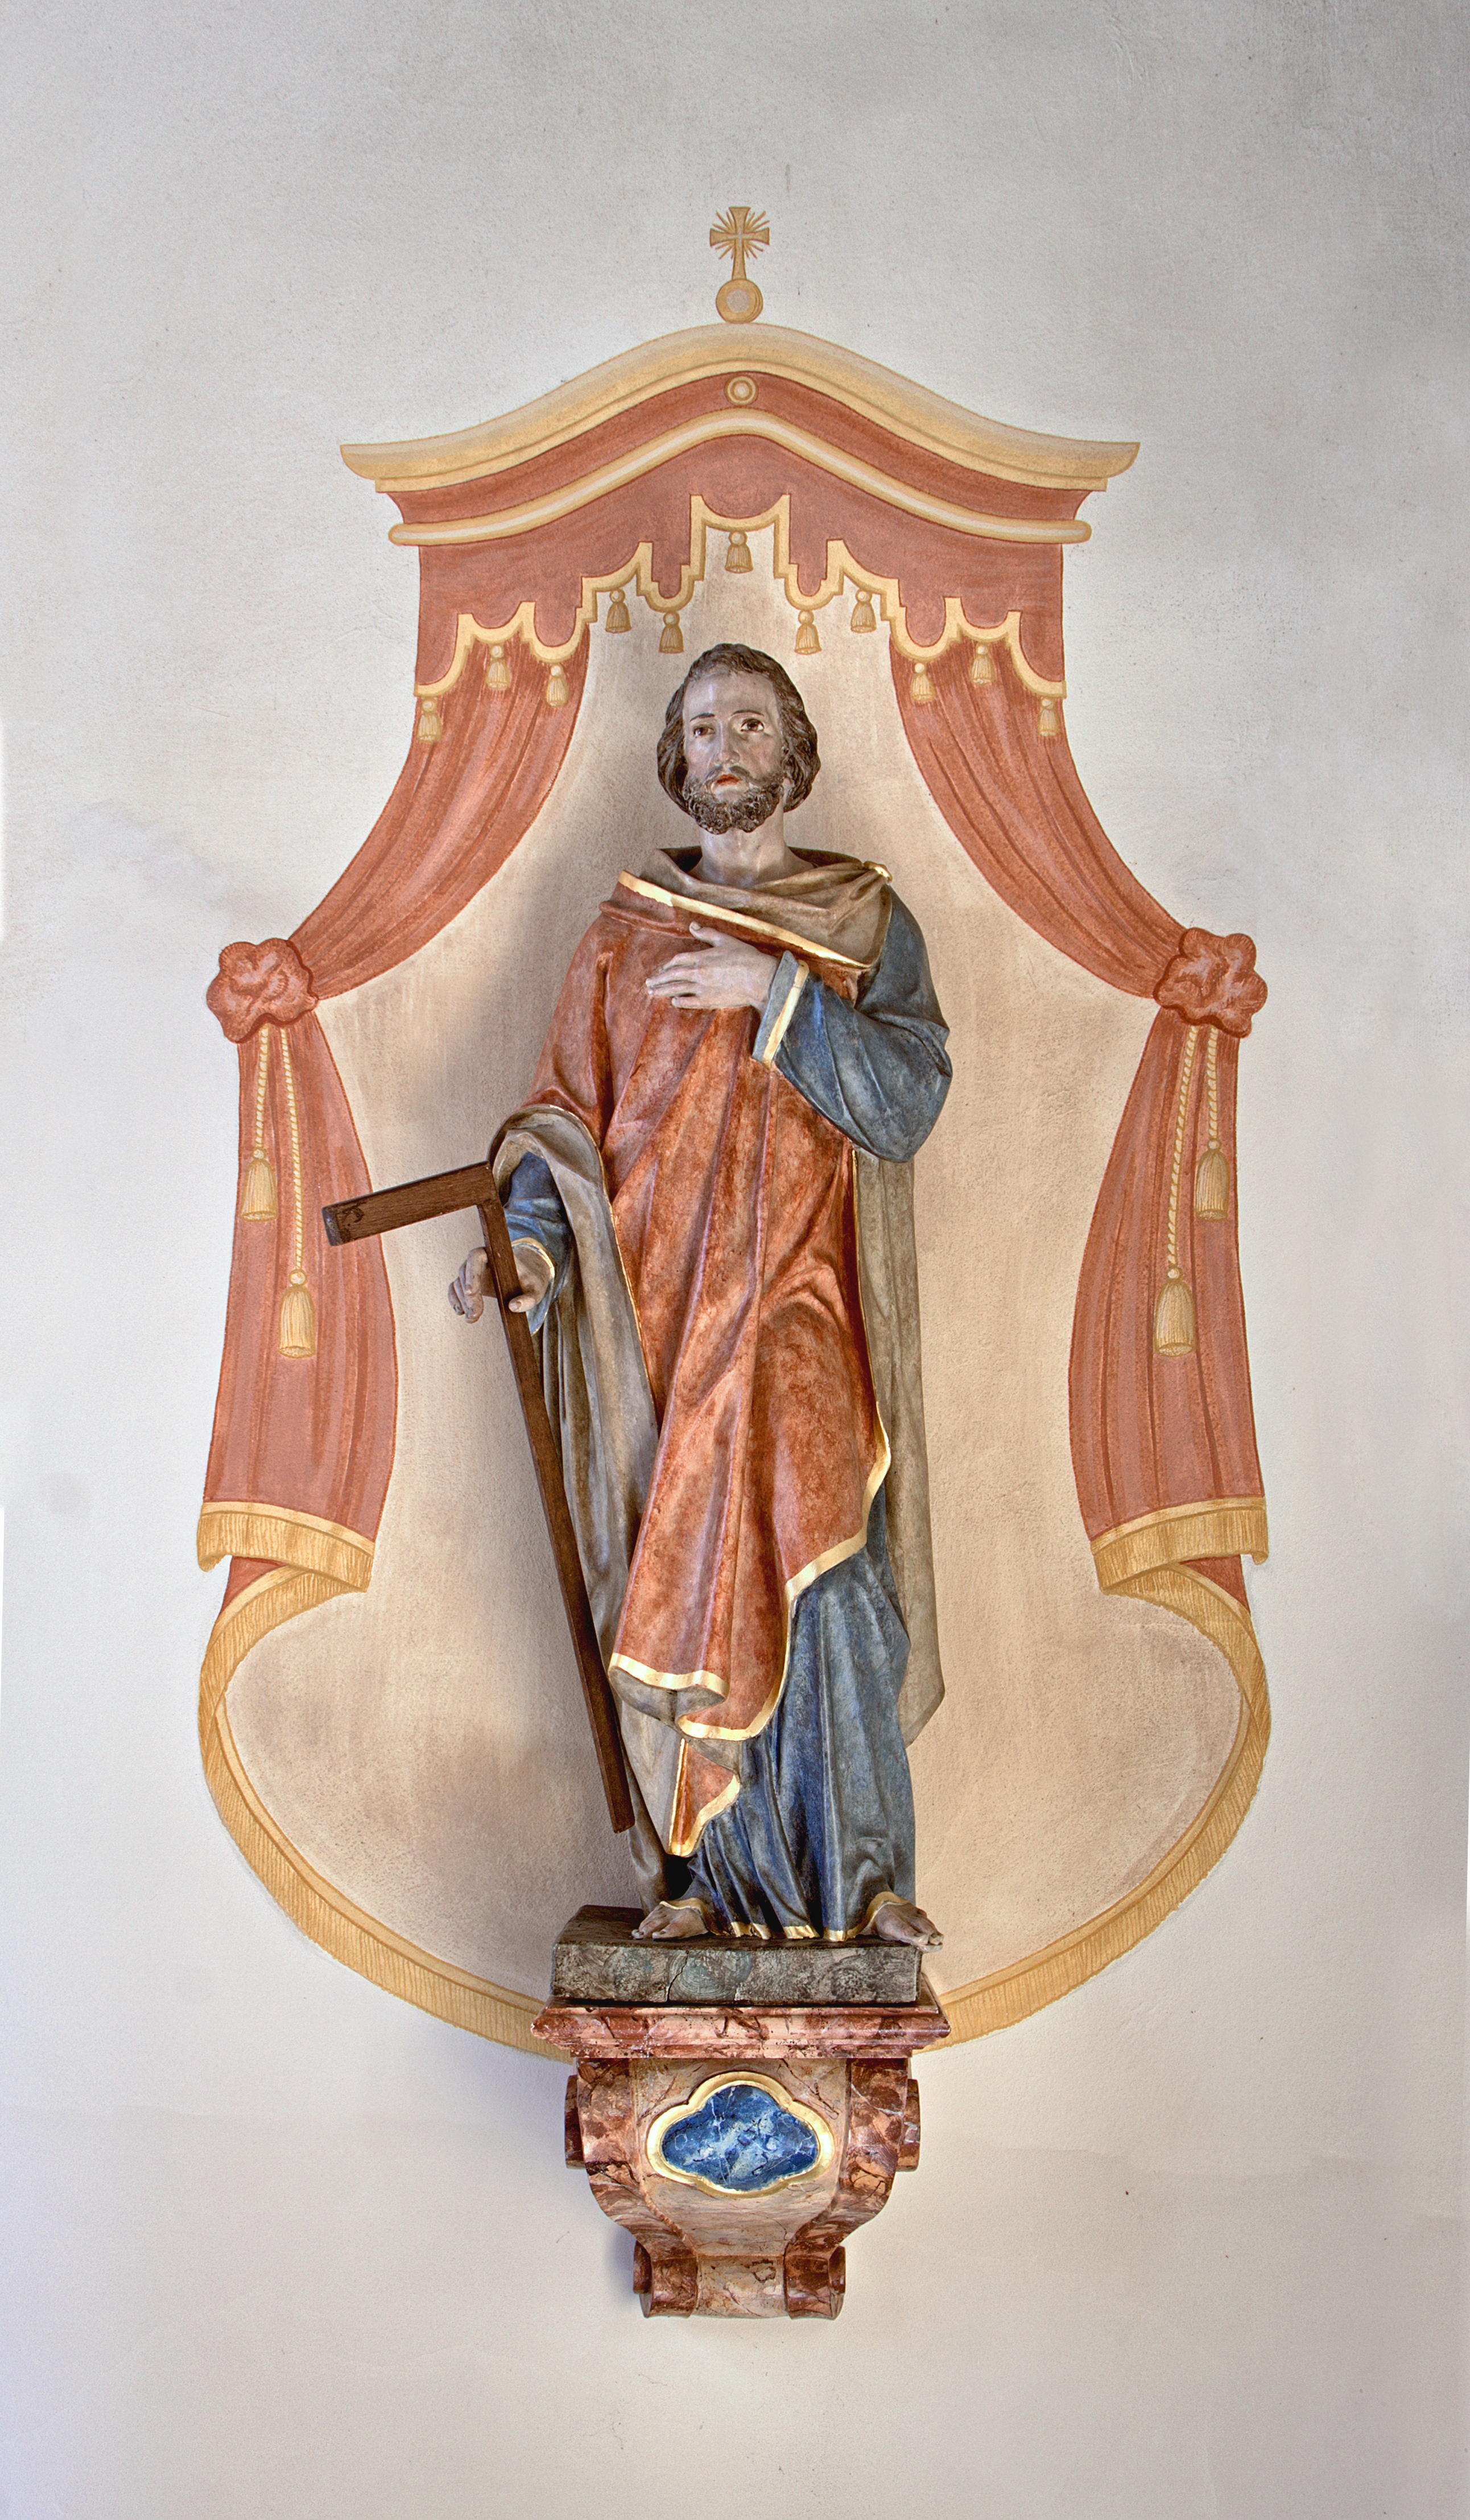 St. Martin Grimmelshofen - St. Joseph